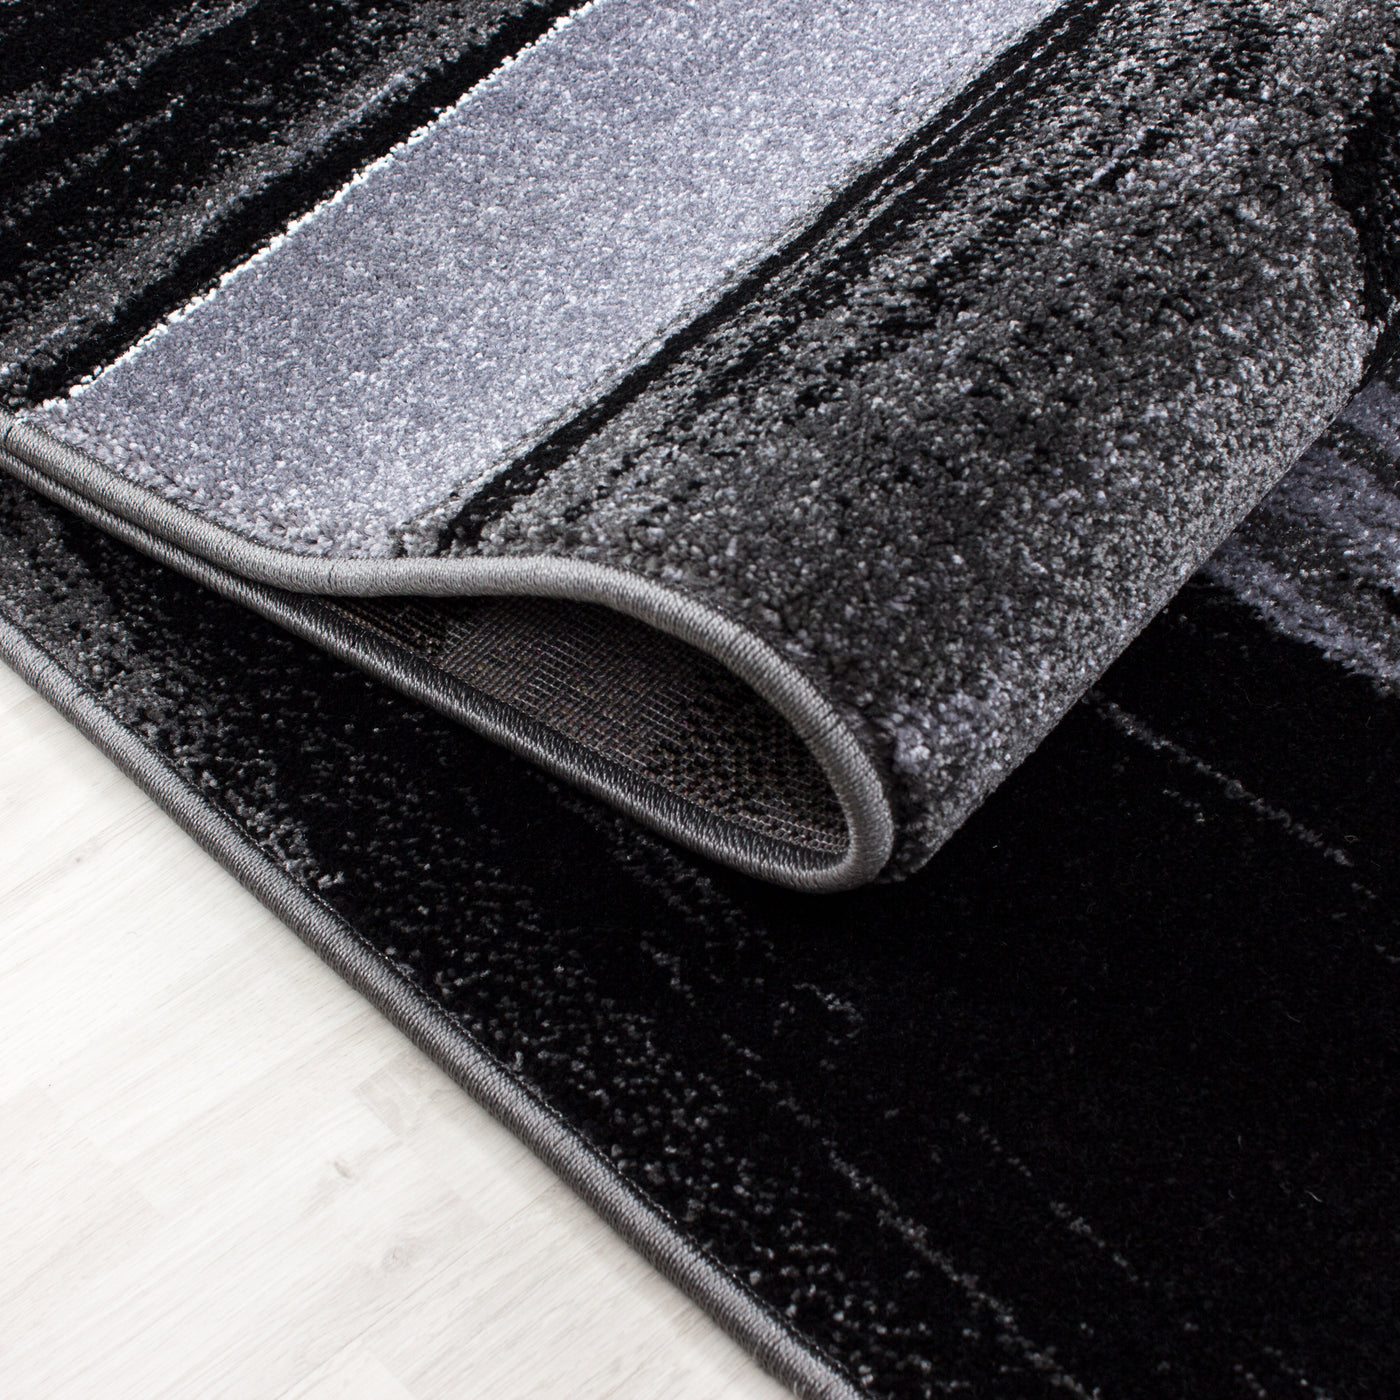 Bettumrandung Teppich Kariert Muster Abstrakt Patchwork Optik 3 teilig Läufer Set Schlafzimmer Flur Grau Schwarz Weiß